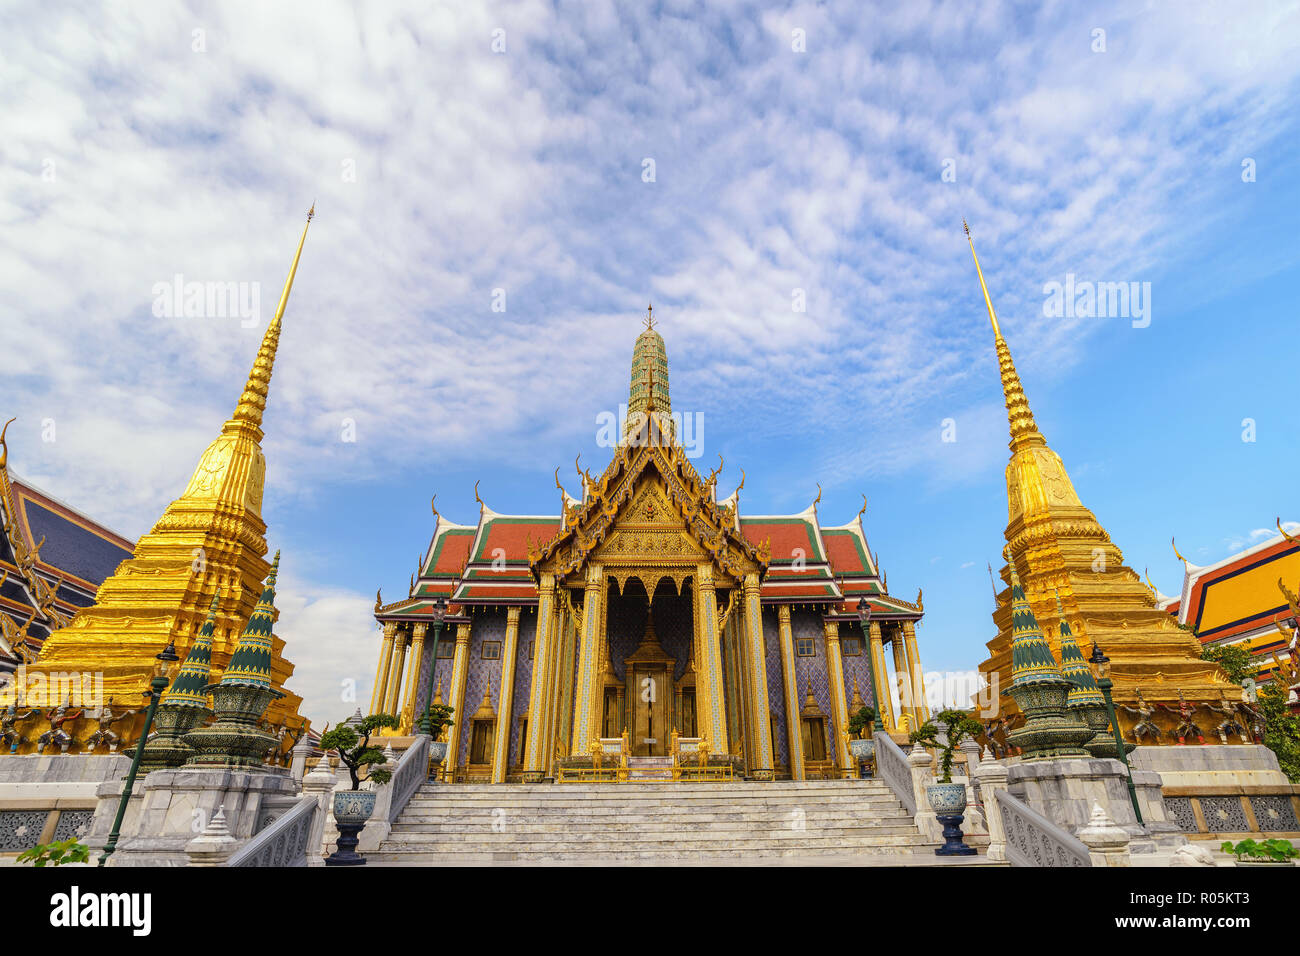 Bangkok Thailand, city skyline at Wat Phra Kaew temple Stock Photo